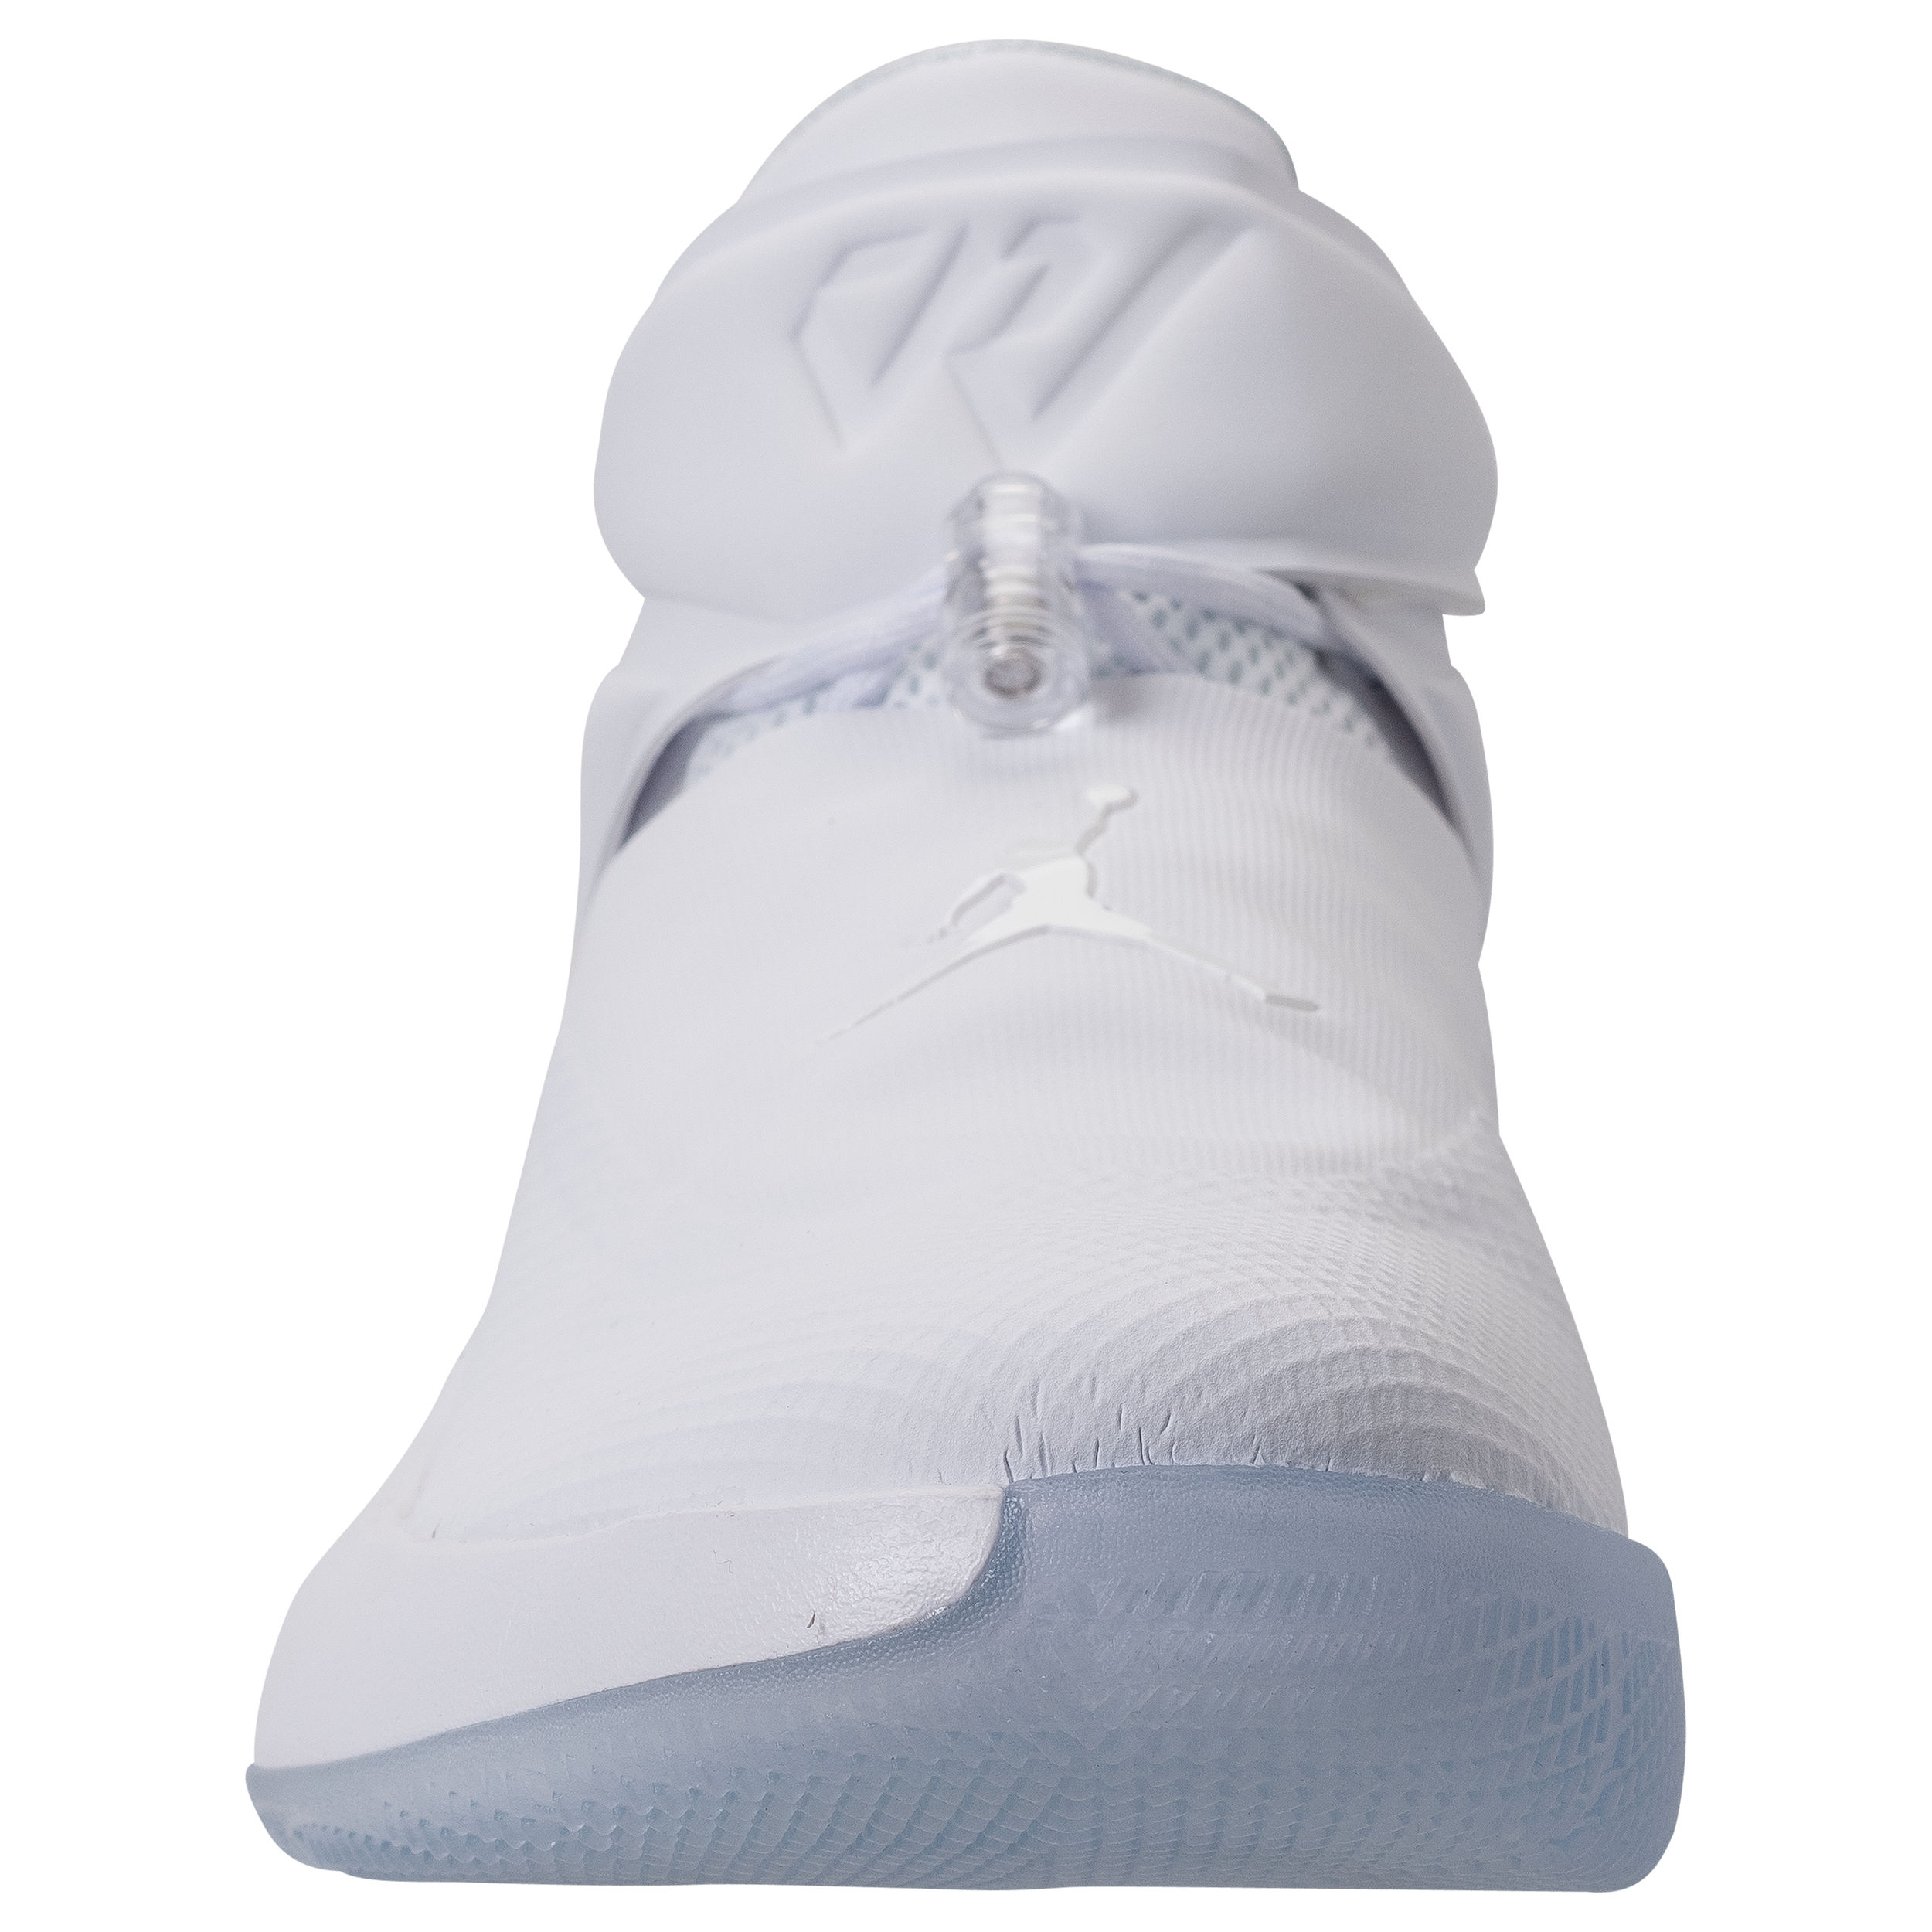 white jordan shoes